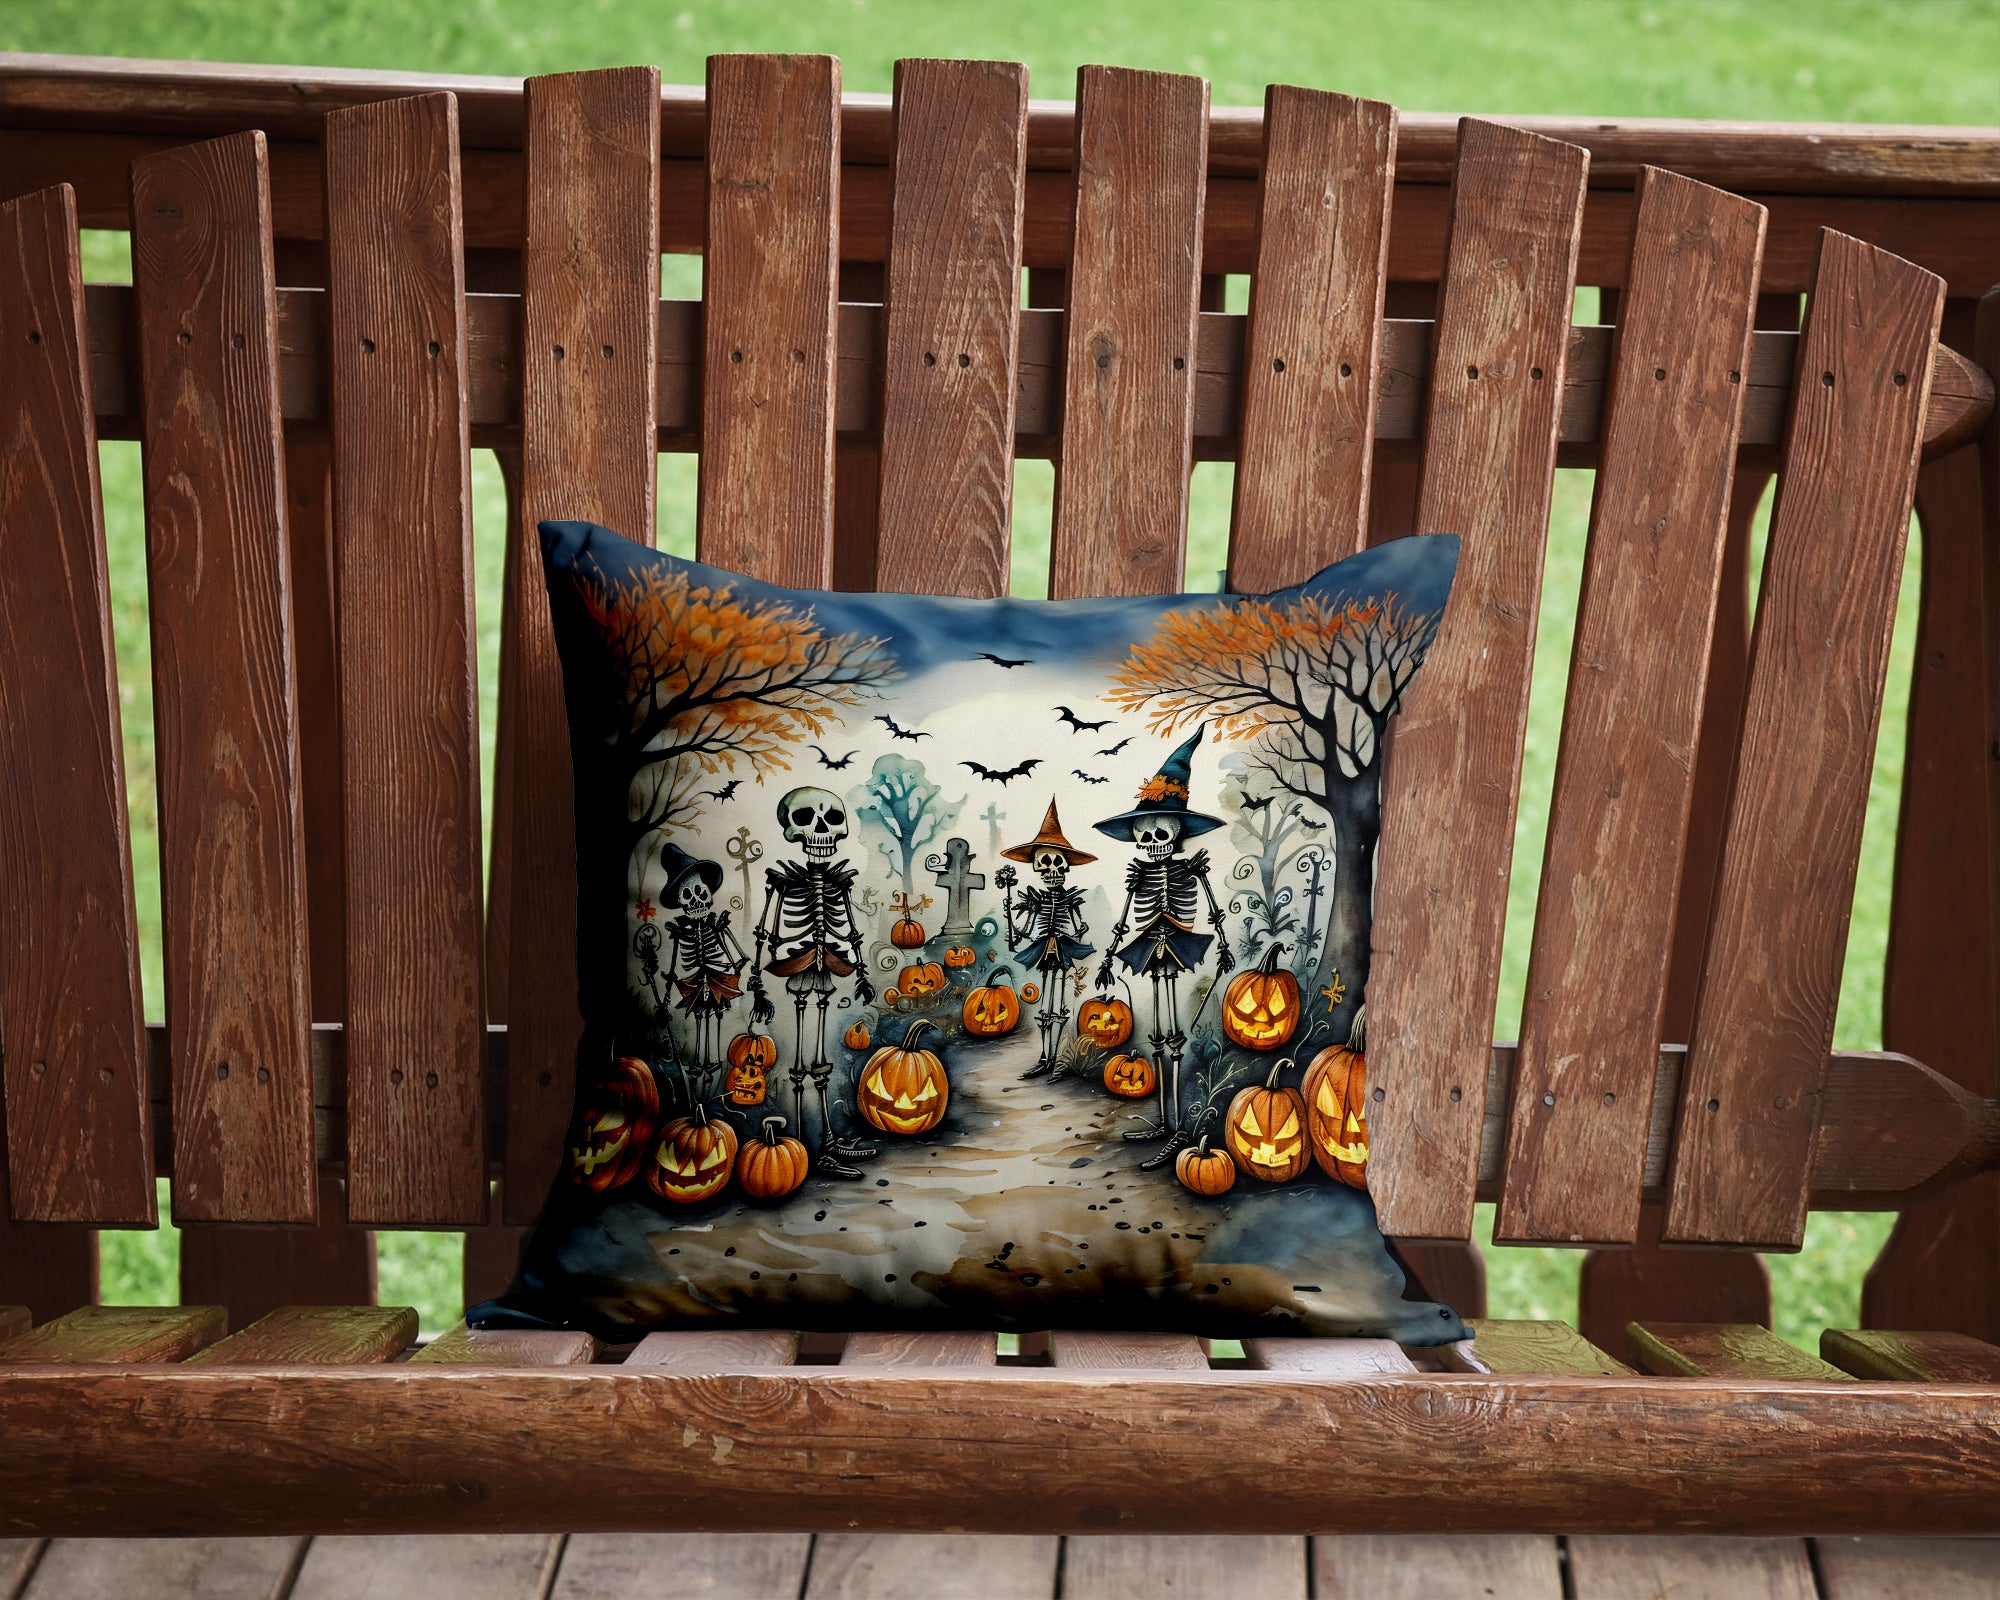 Calacas Skeletons Spooky Halloween Fabric Decorative Pillow